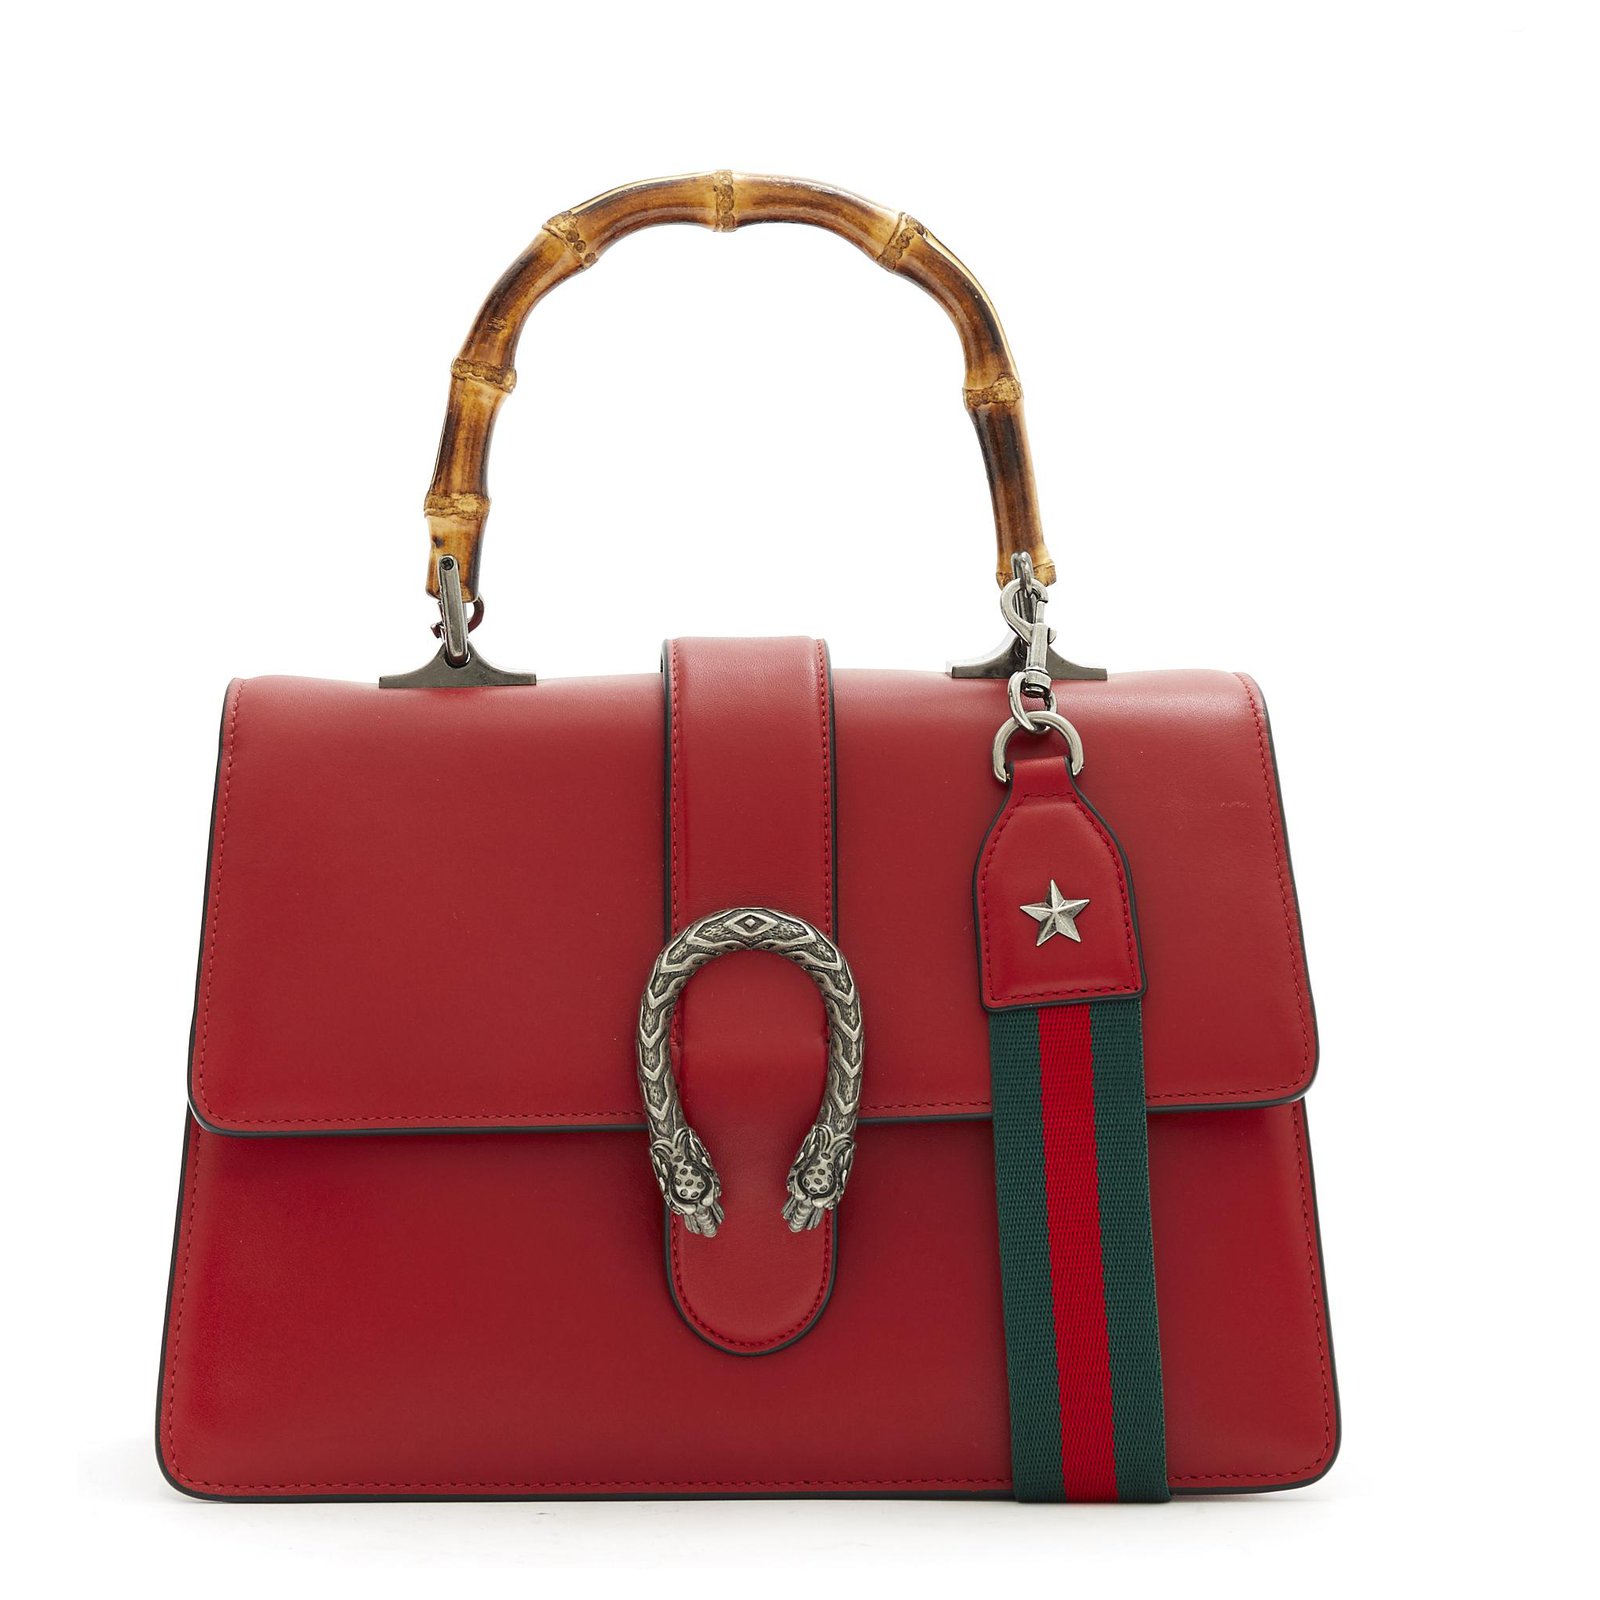 Gucci DIONYSUS BAMBOO RED NEW Handbags 